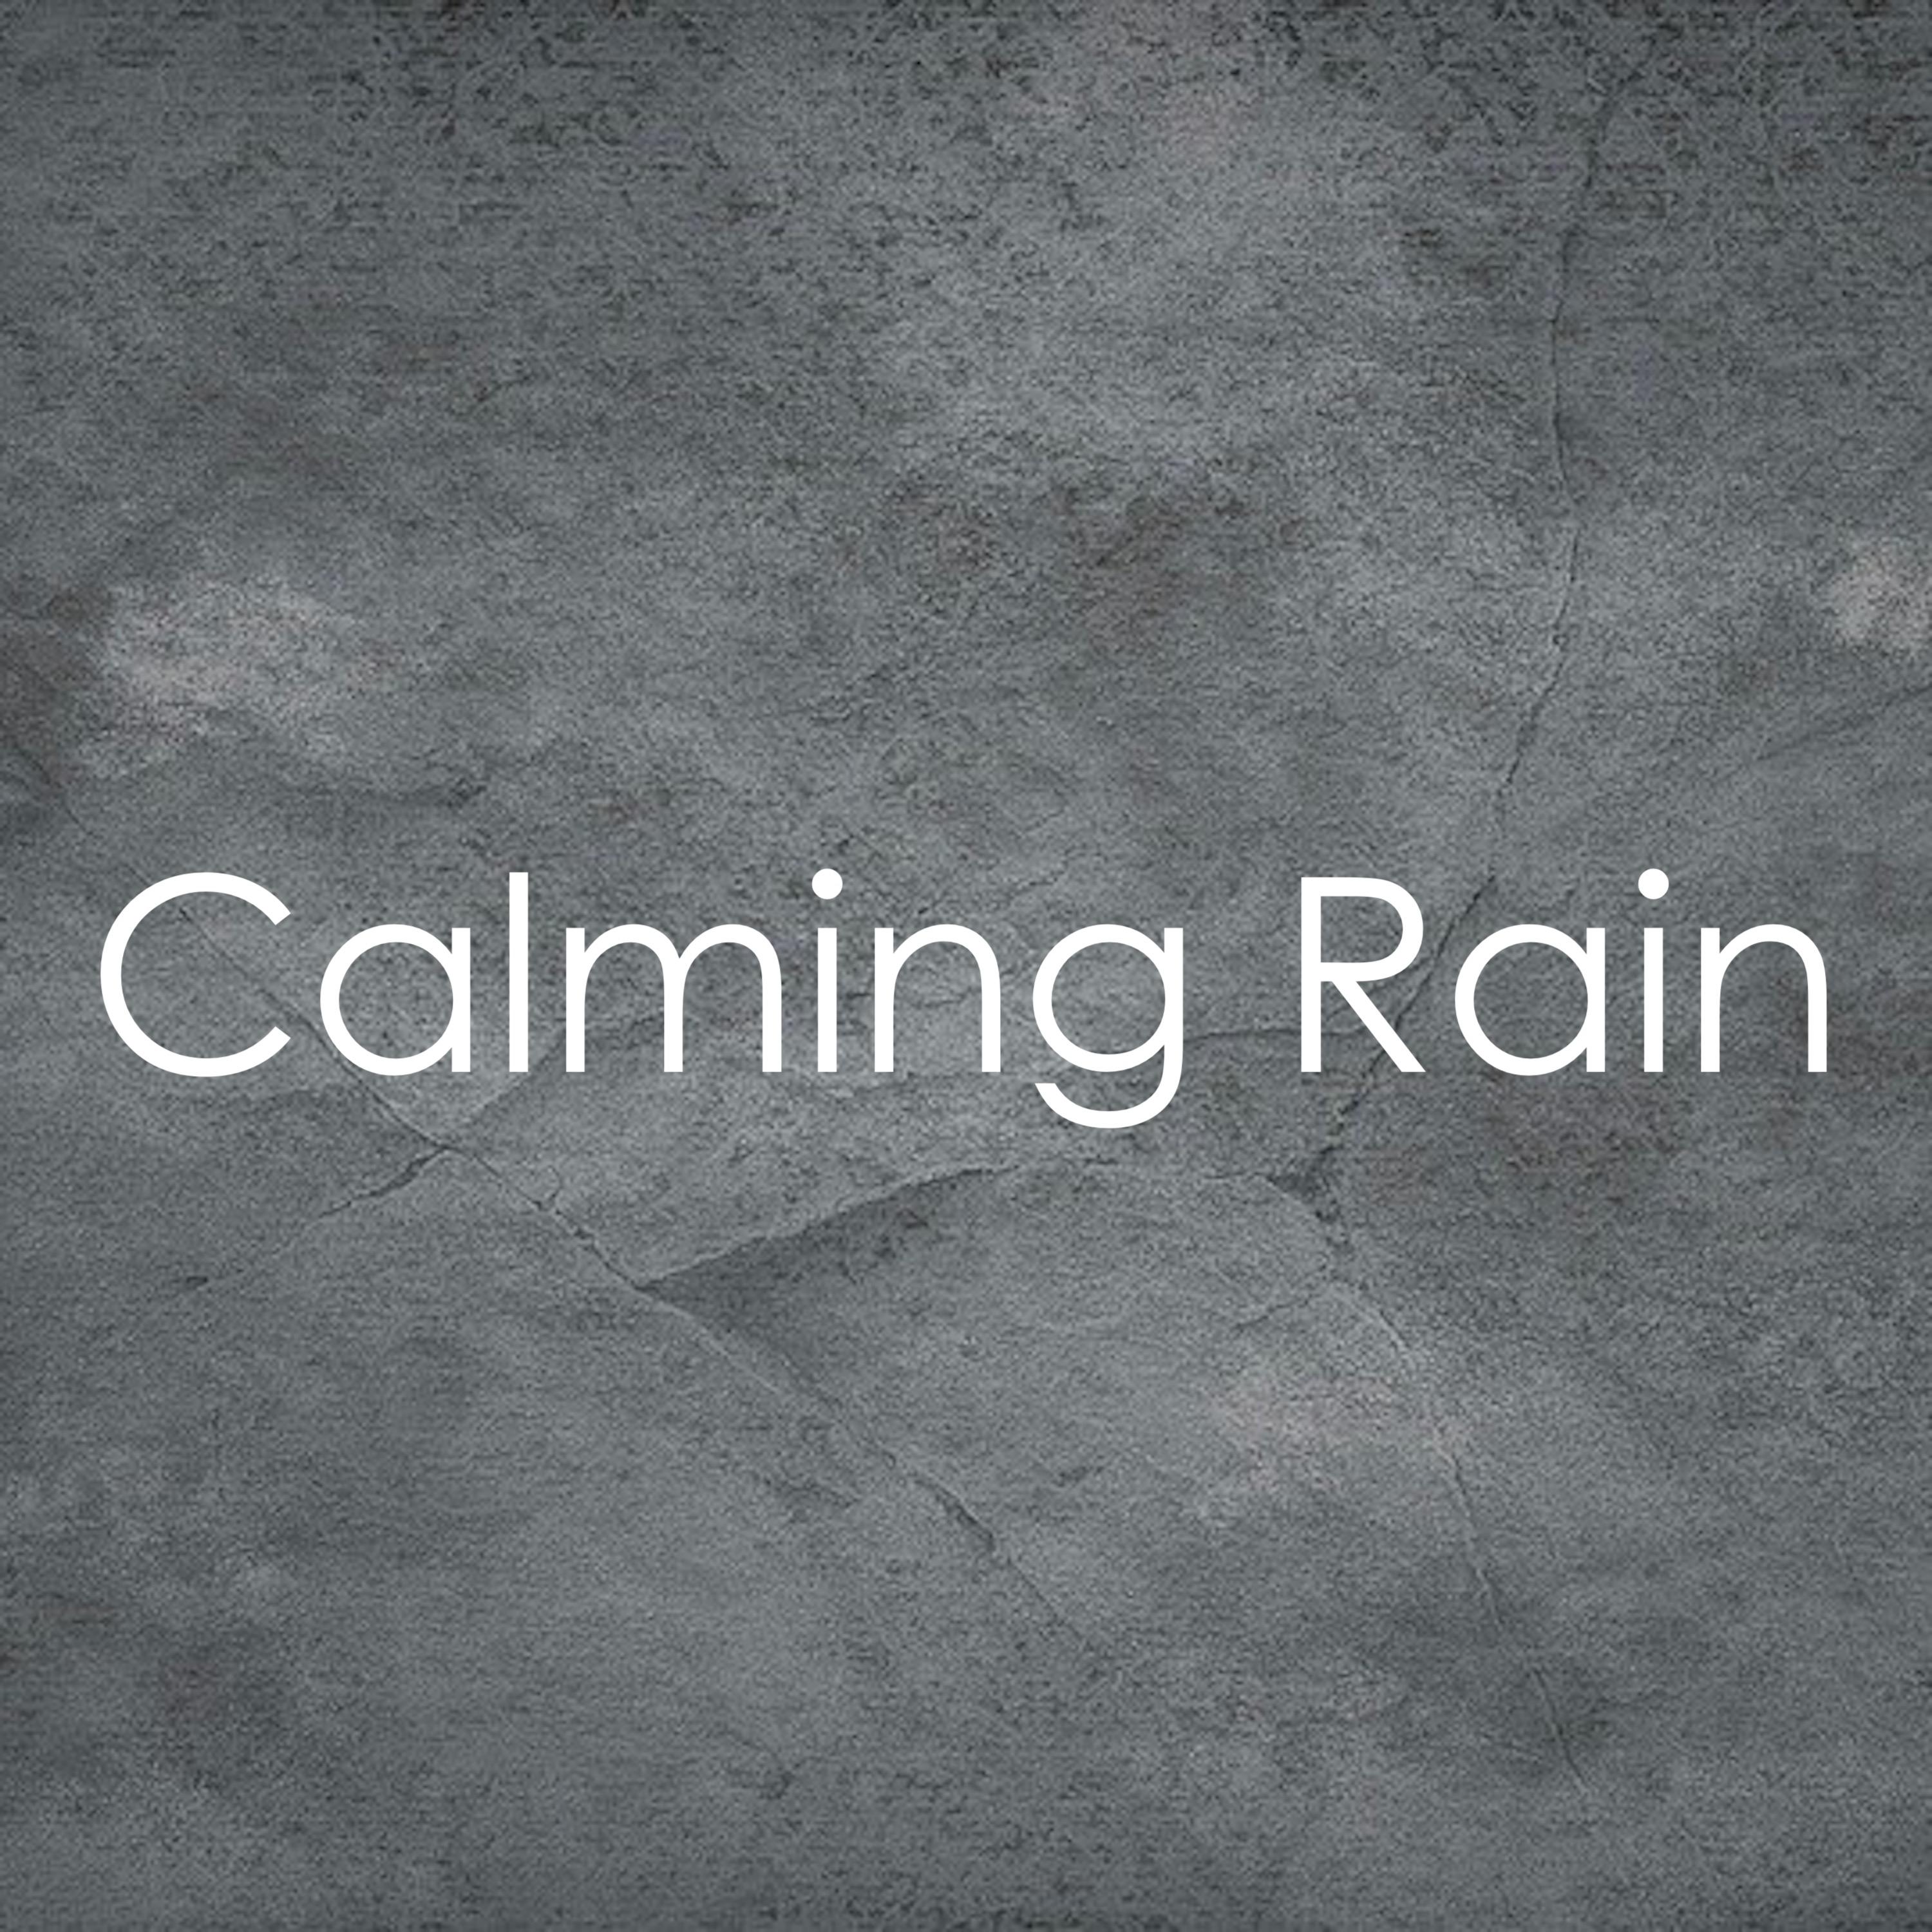 16 Calming Rain Sounds - Nature Sounds and Relaxing Rain